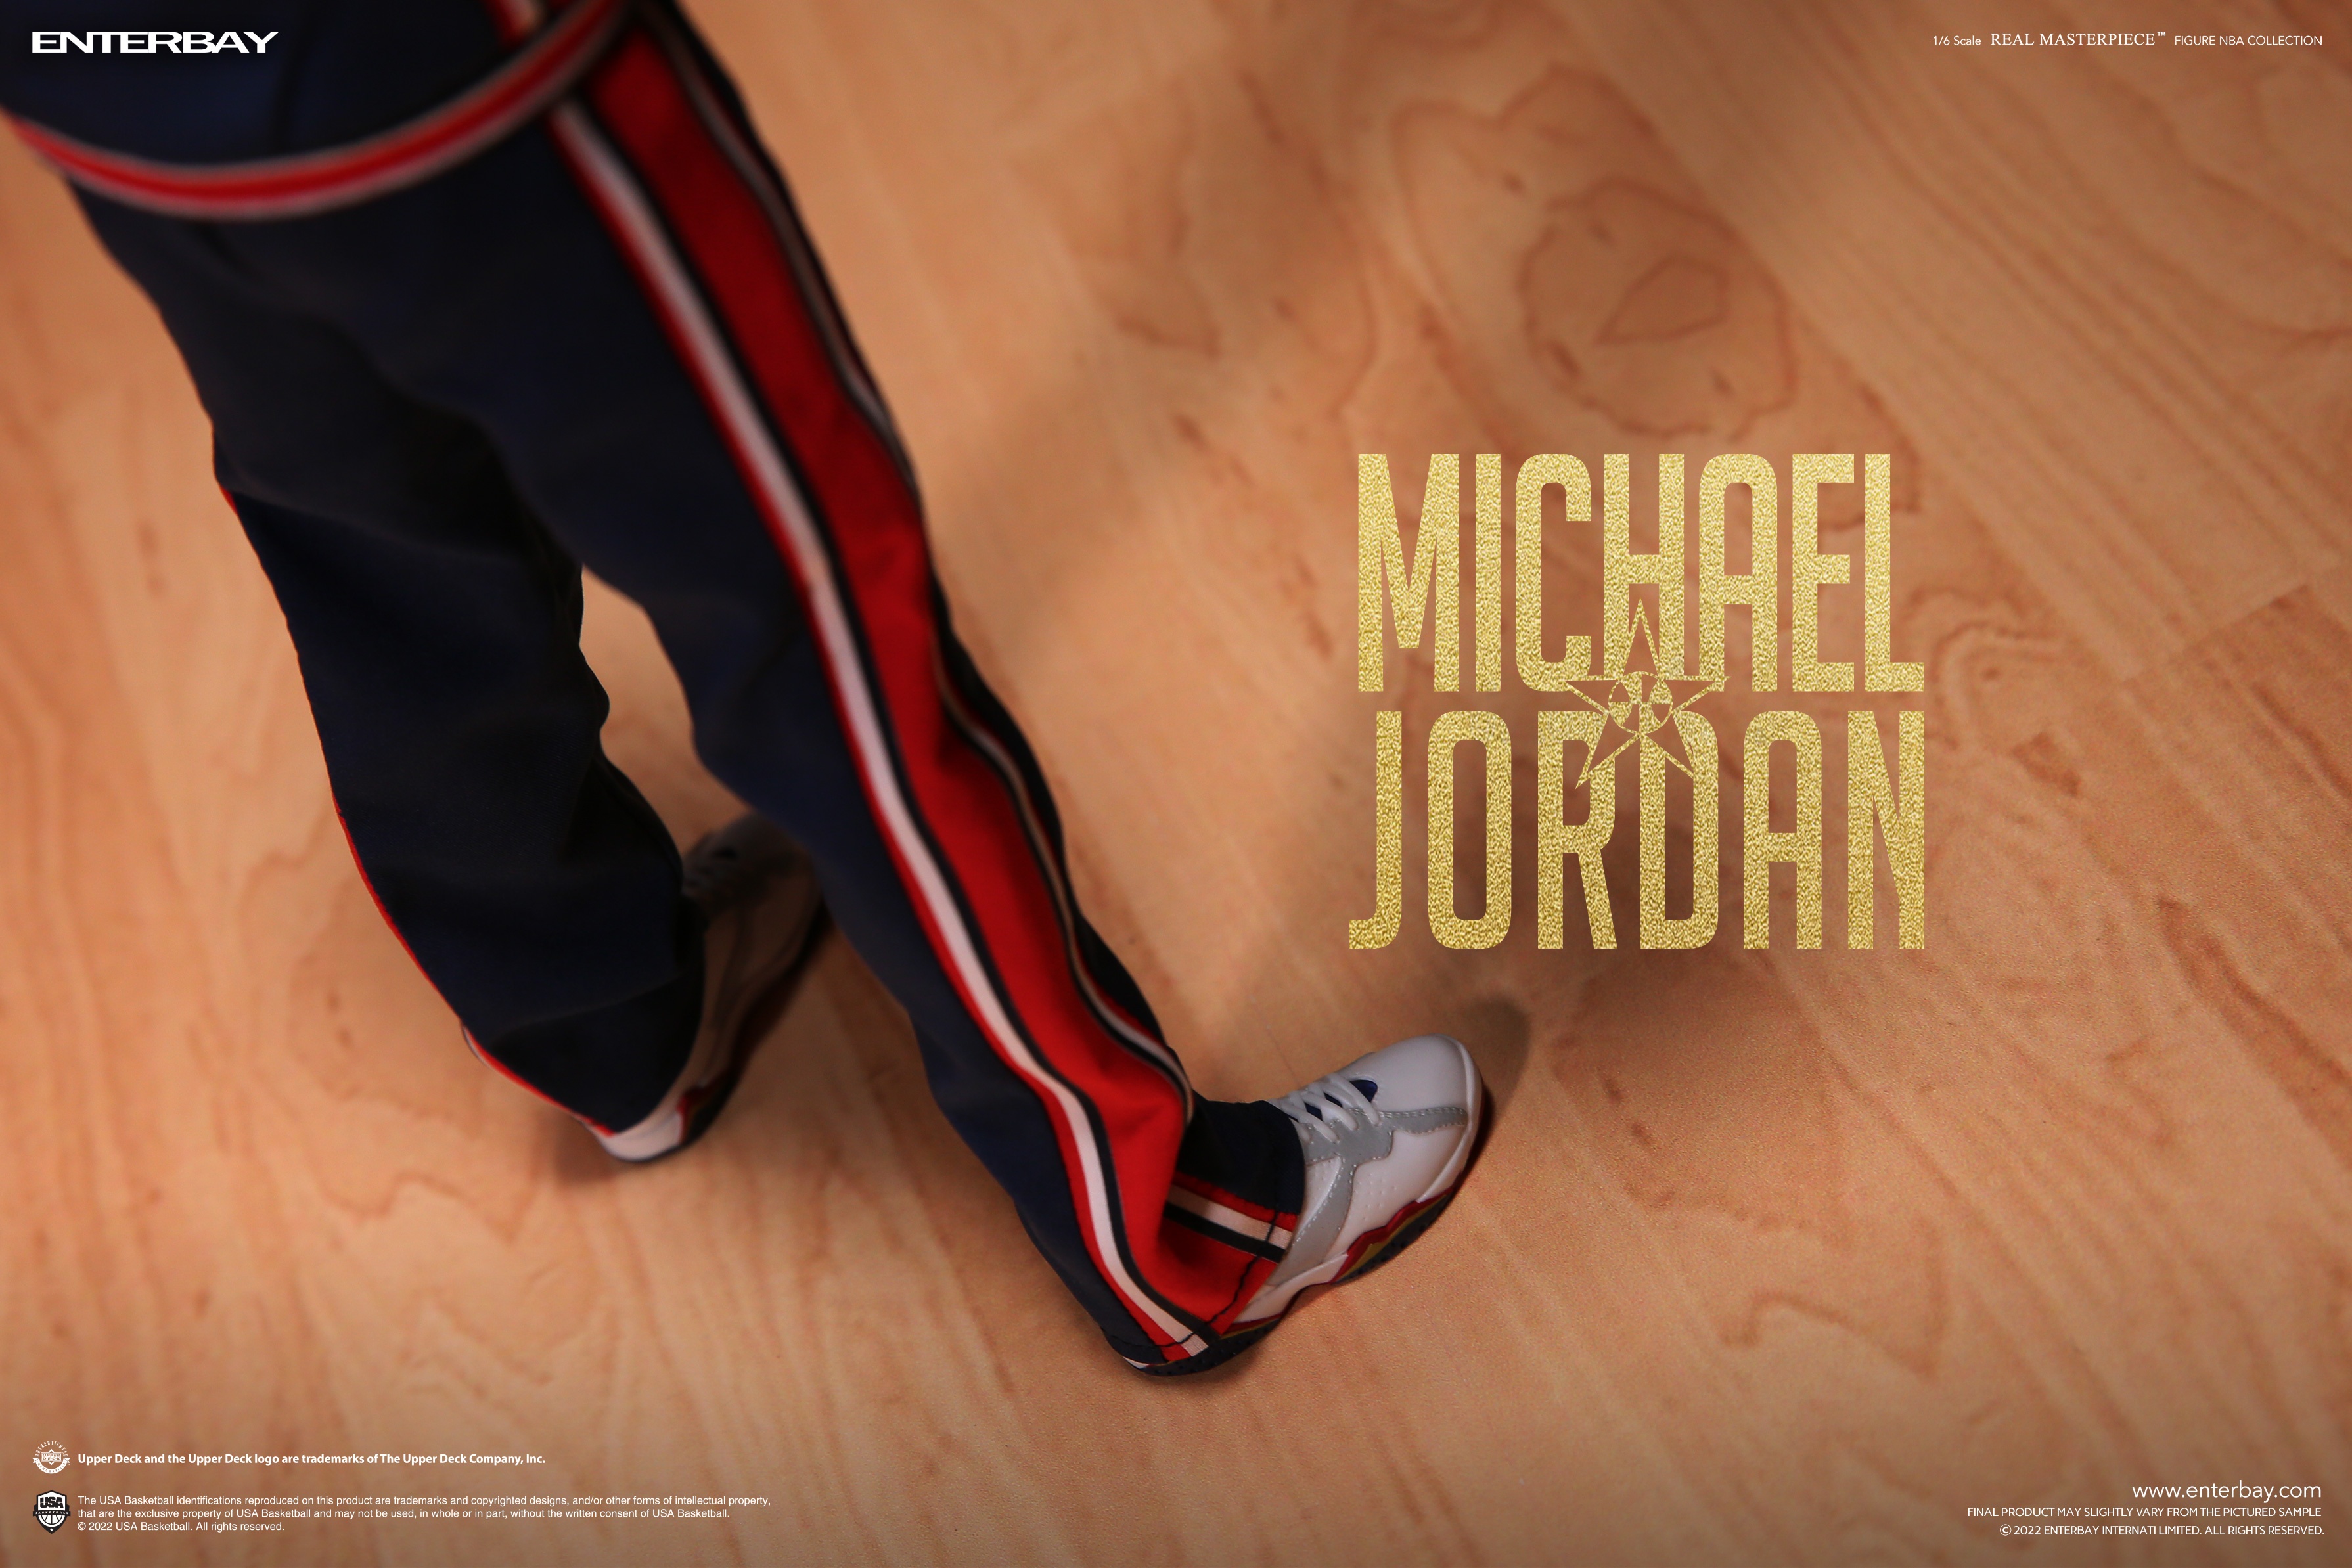 Real Masterpiece NBA Collection / Michael Jordan Collectible